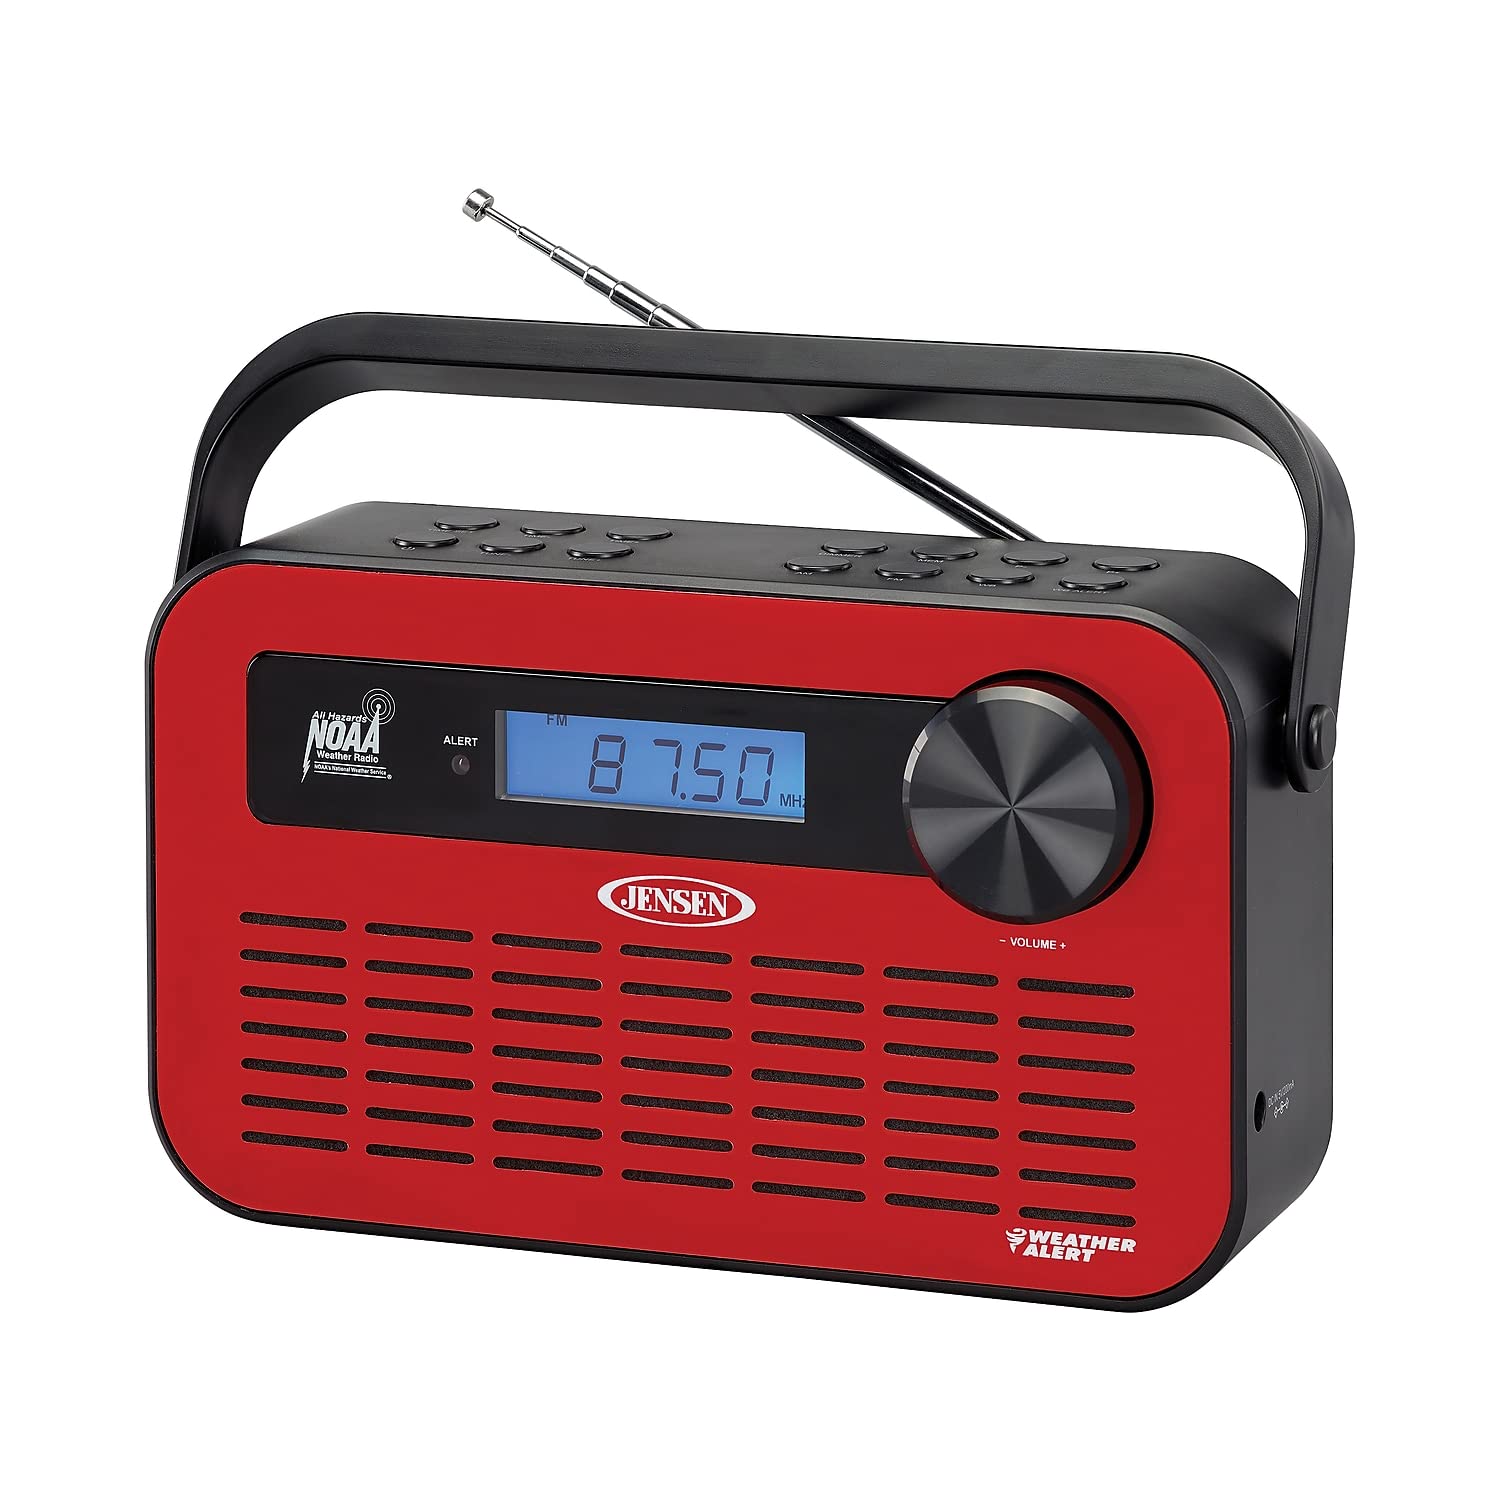 JENSEN JEP-250 DIGITAL AM/FM WEATHER RADIO